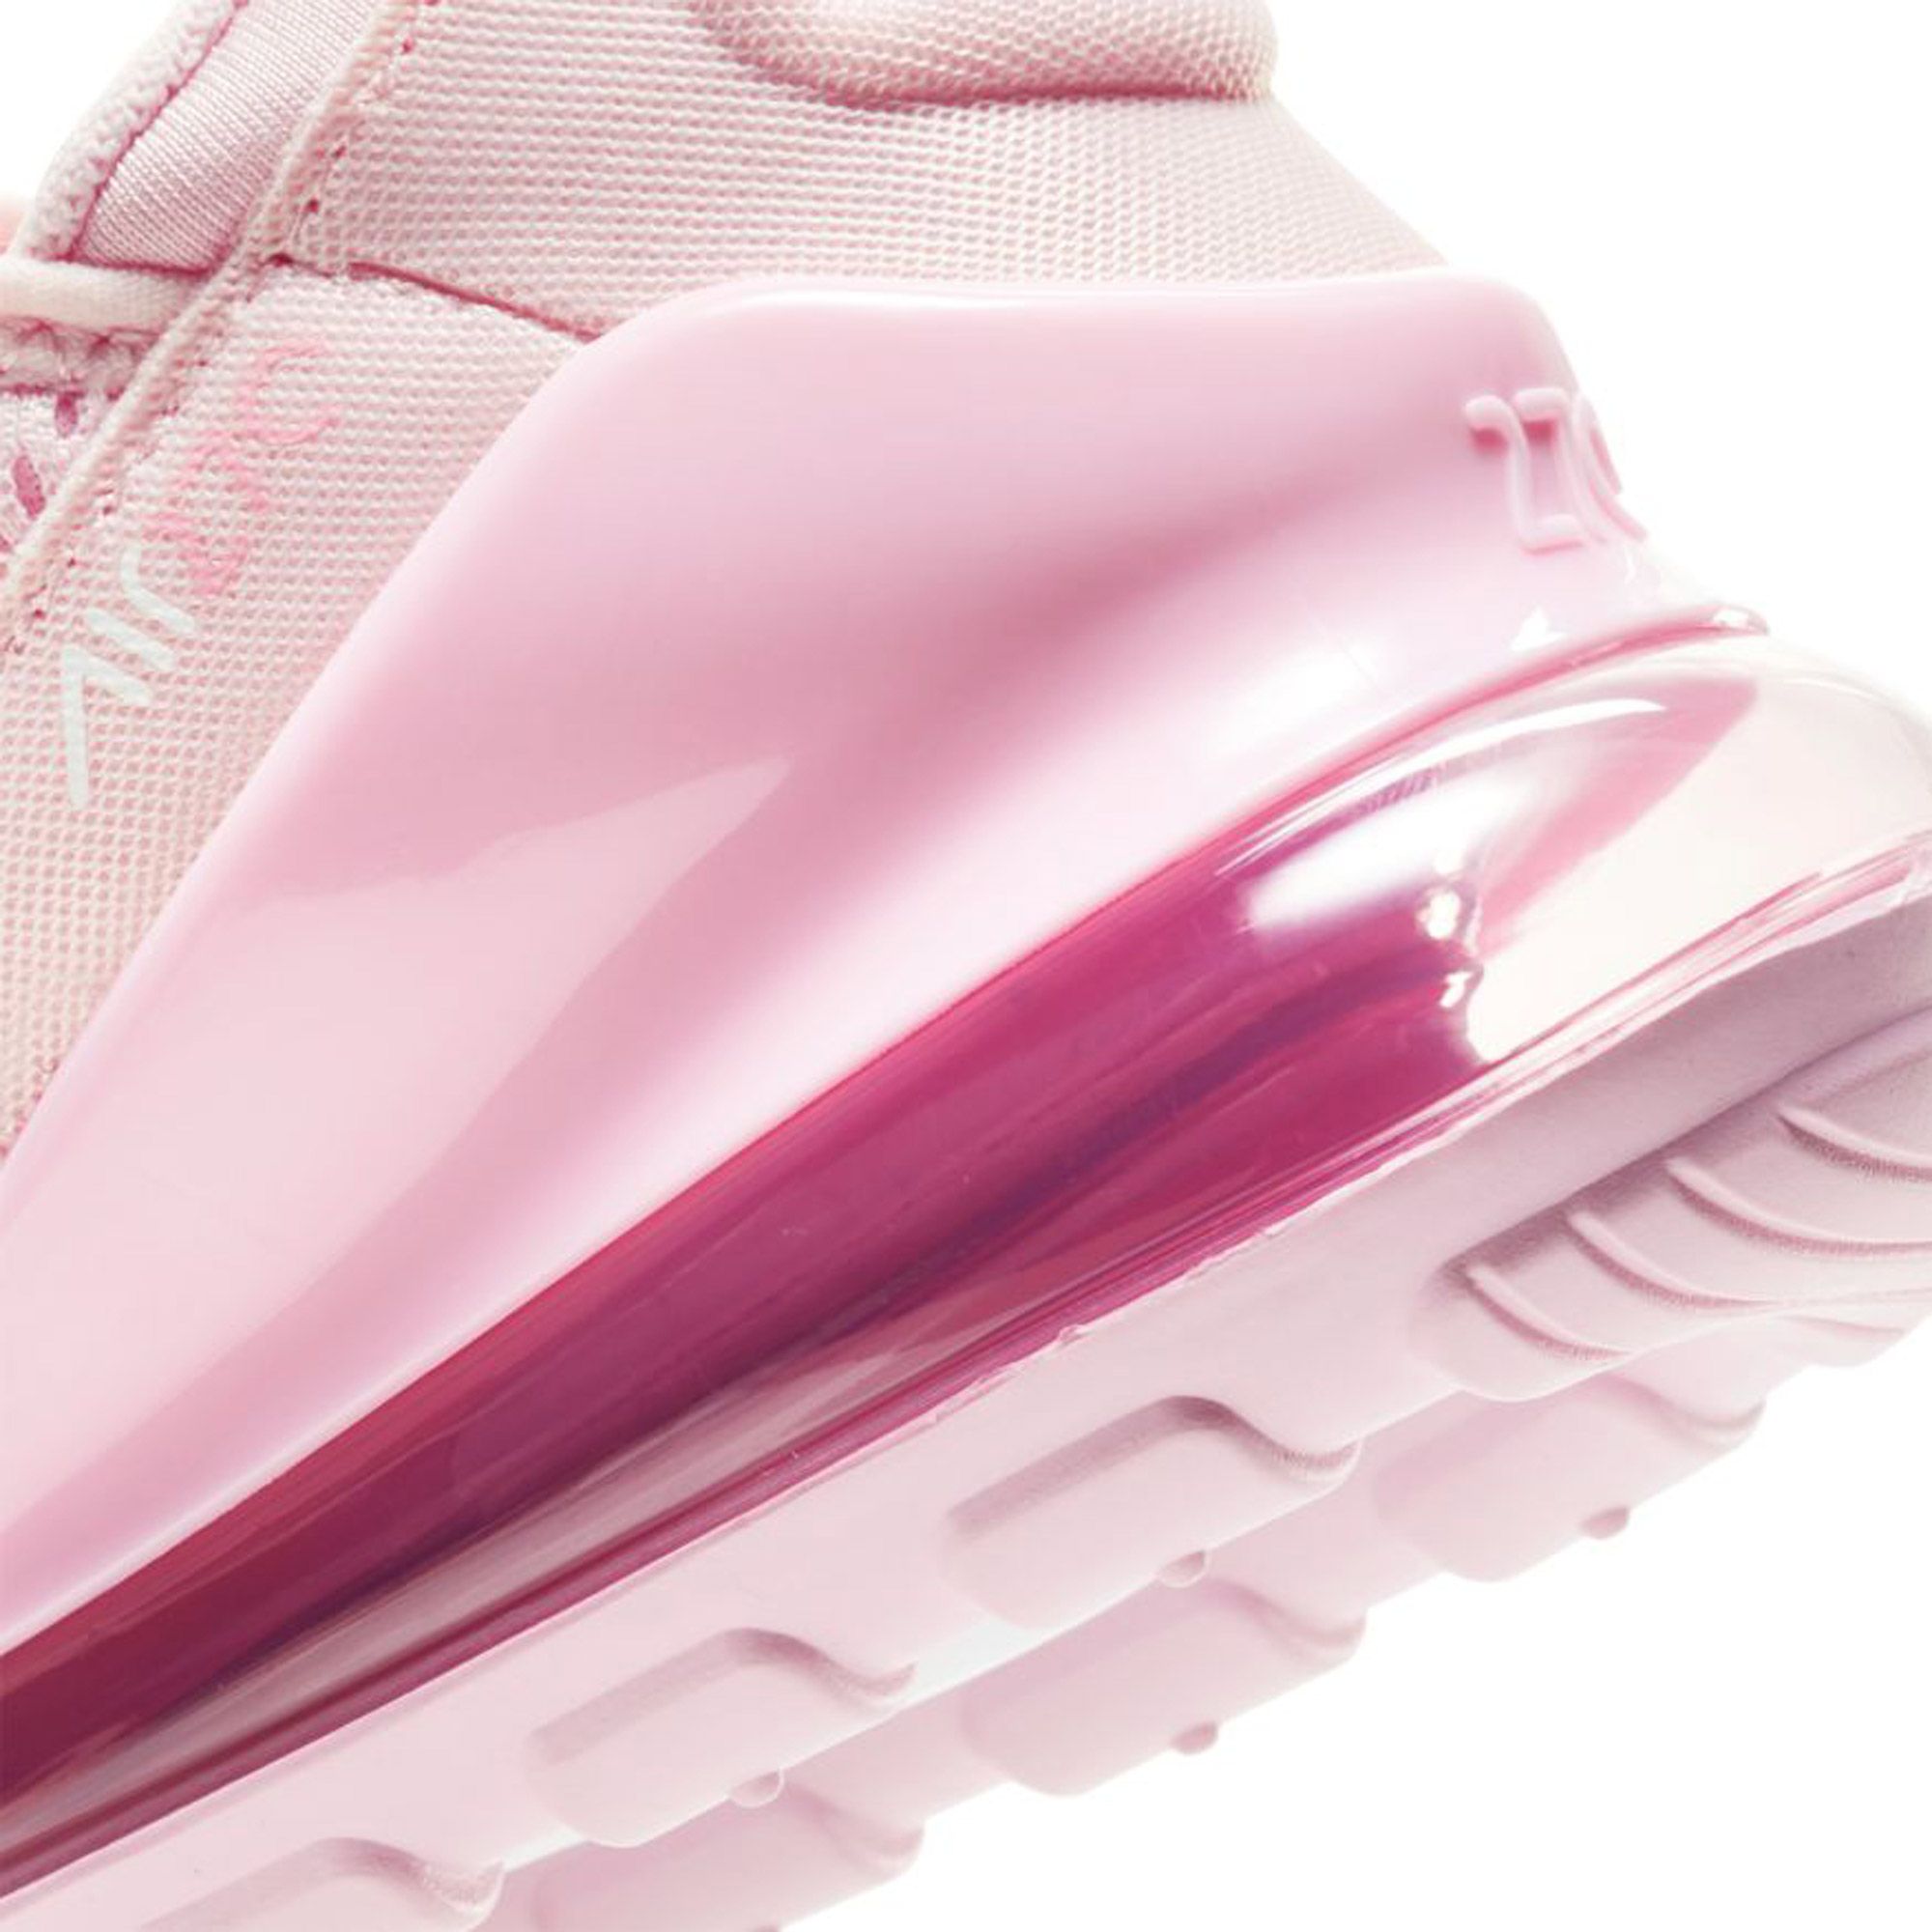 Nike Air Max 270 GS 'Pink Foam